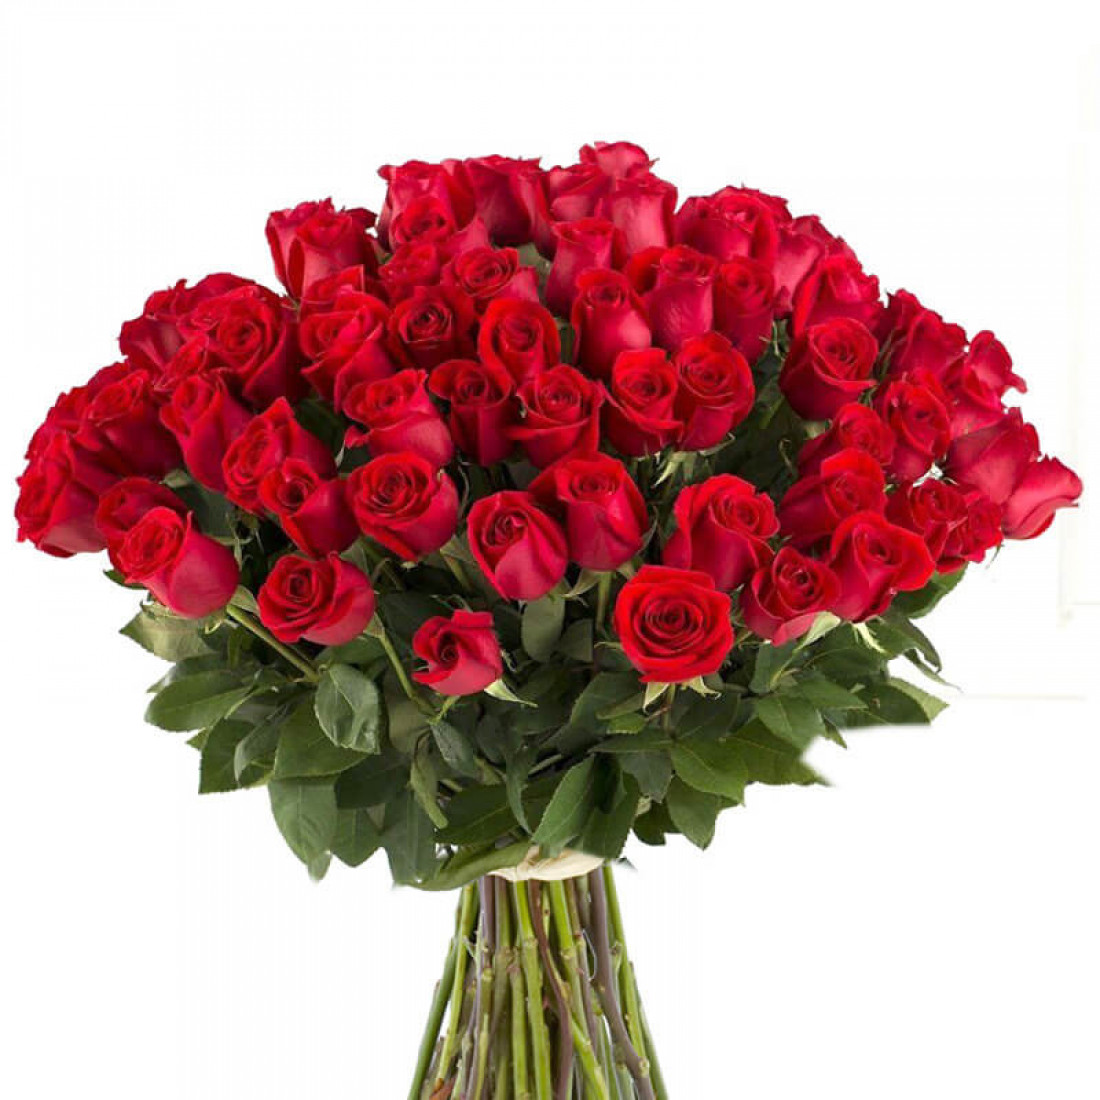 Send 60 Red Roses Bouquet to Pakistan | PrimeFlowersPK